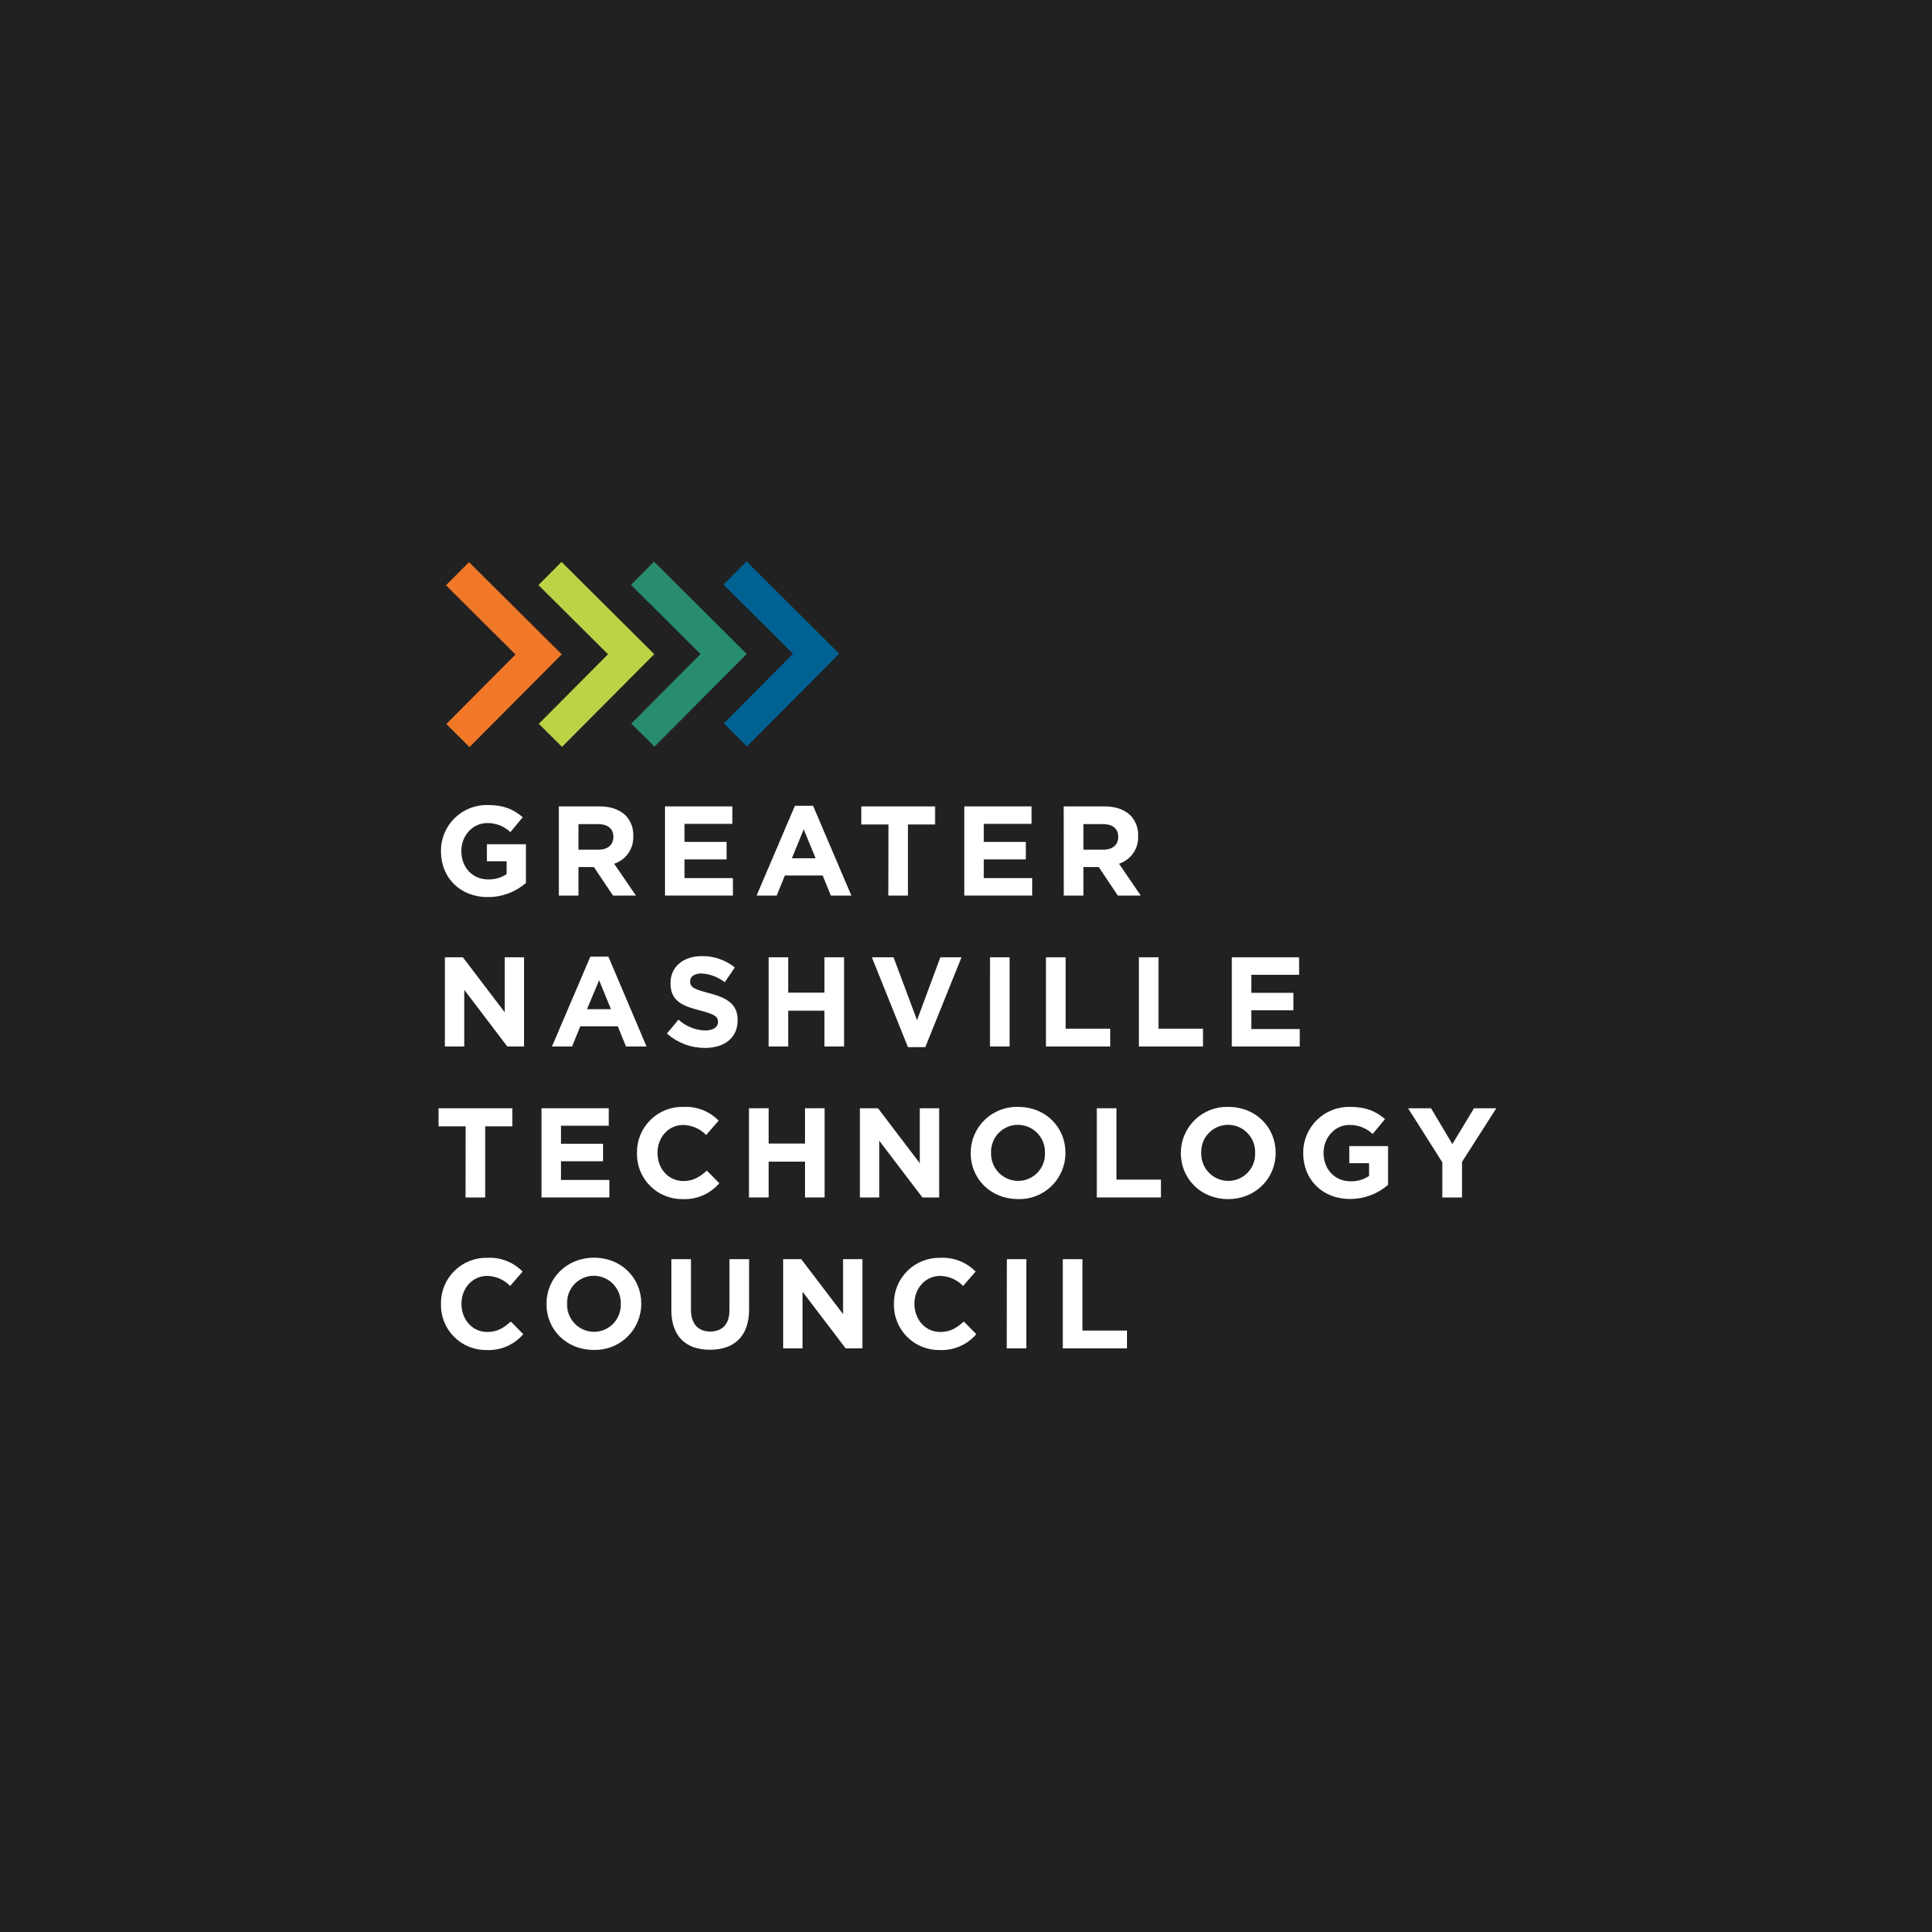 Nashville technology council